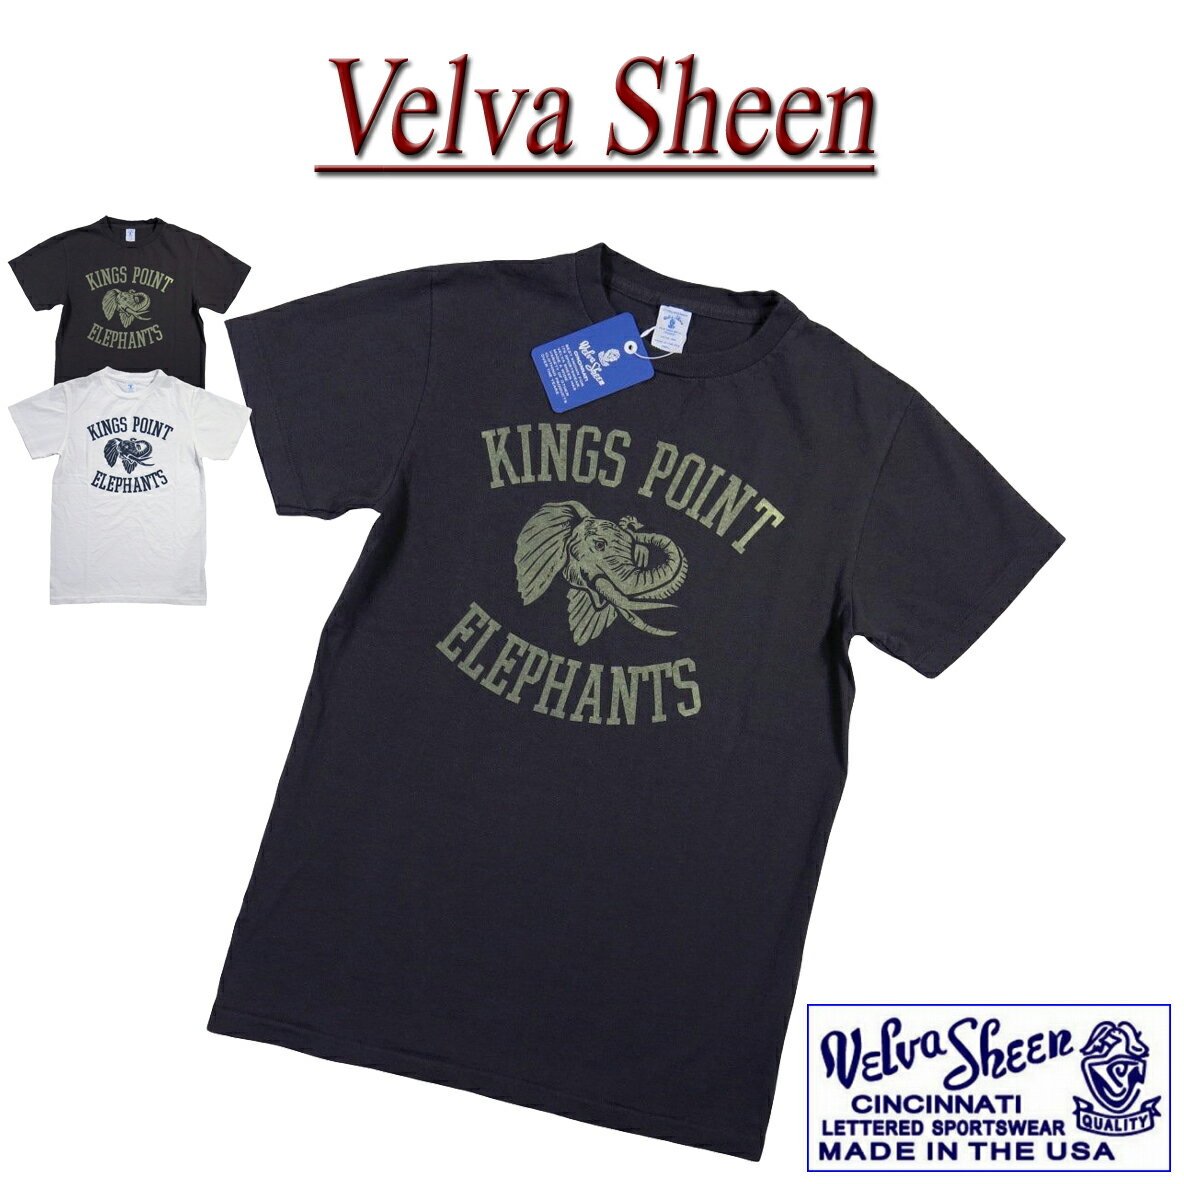  jd551 新品 Velva Sheen USA製 半袖 KINGS POINT ELEPHANTS TEE Tシャツ 162030 ベルバシーン メンズ ブルーレーベル ティーシャツ Made in USA 